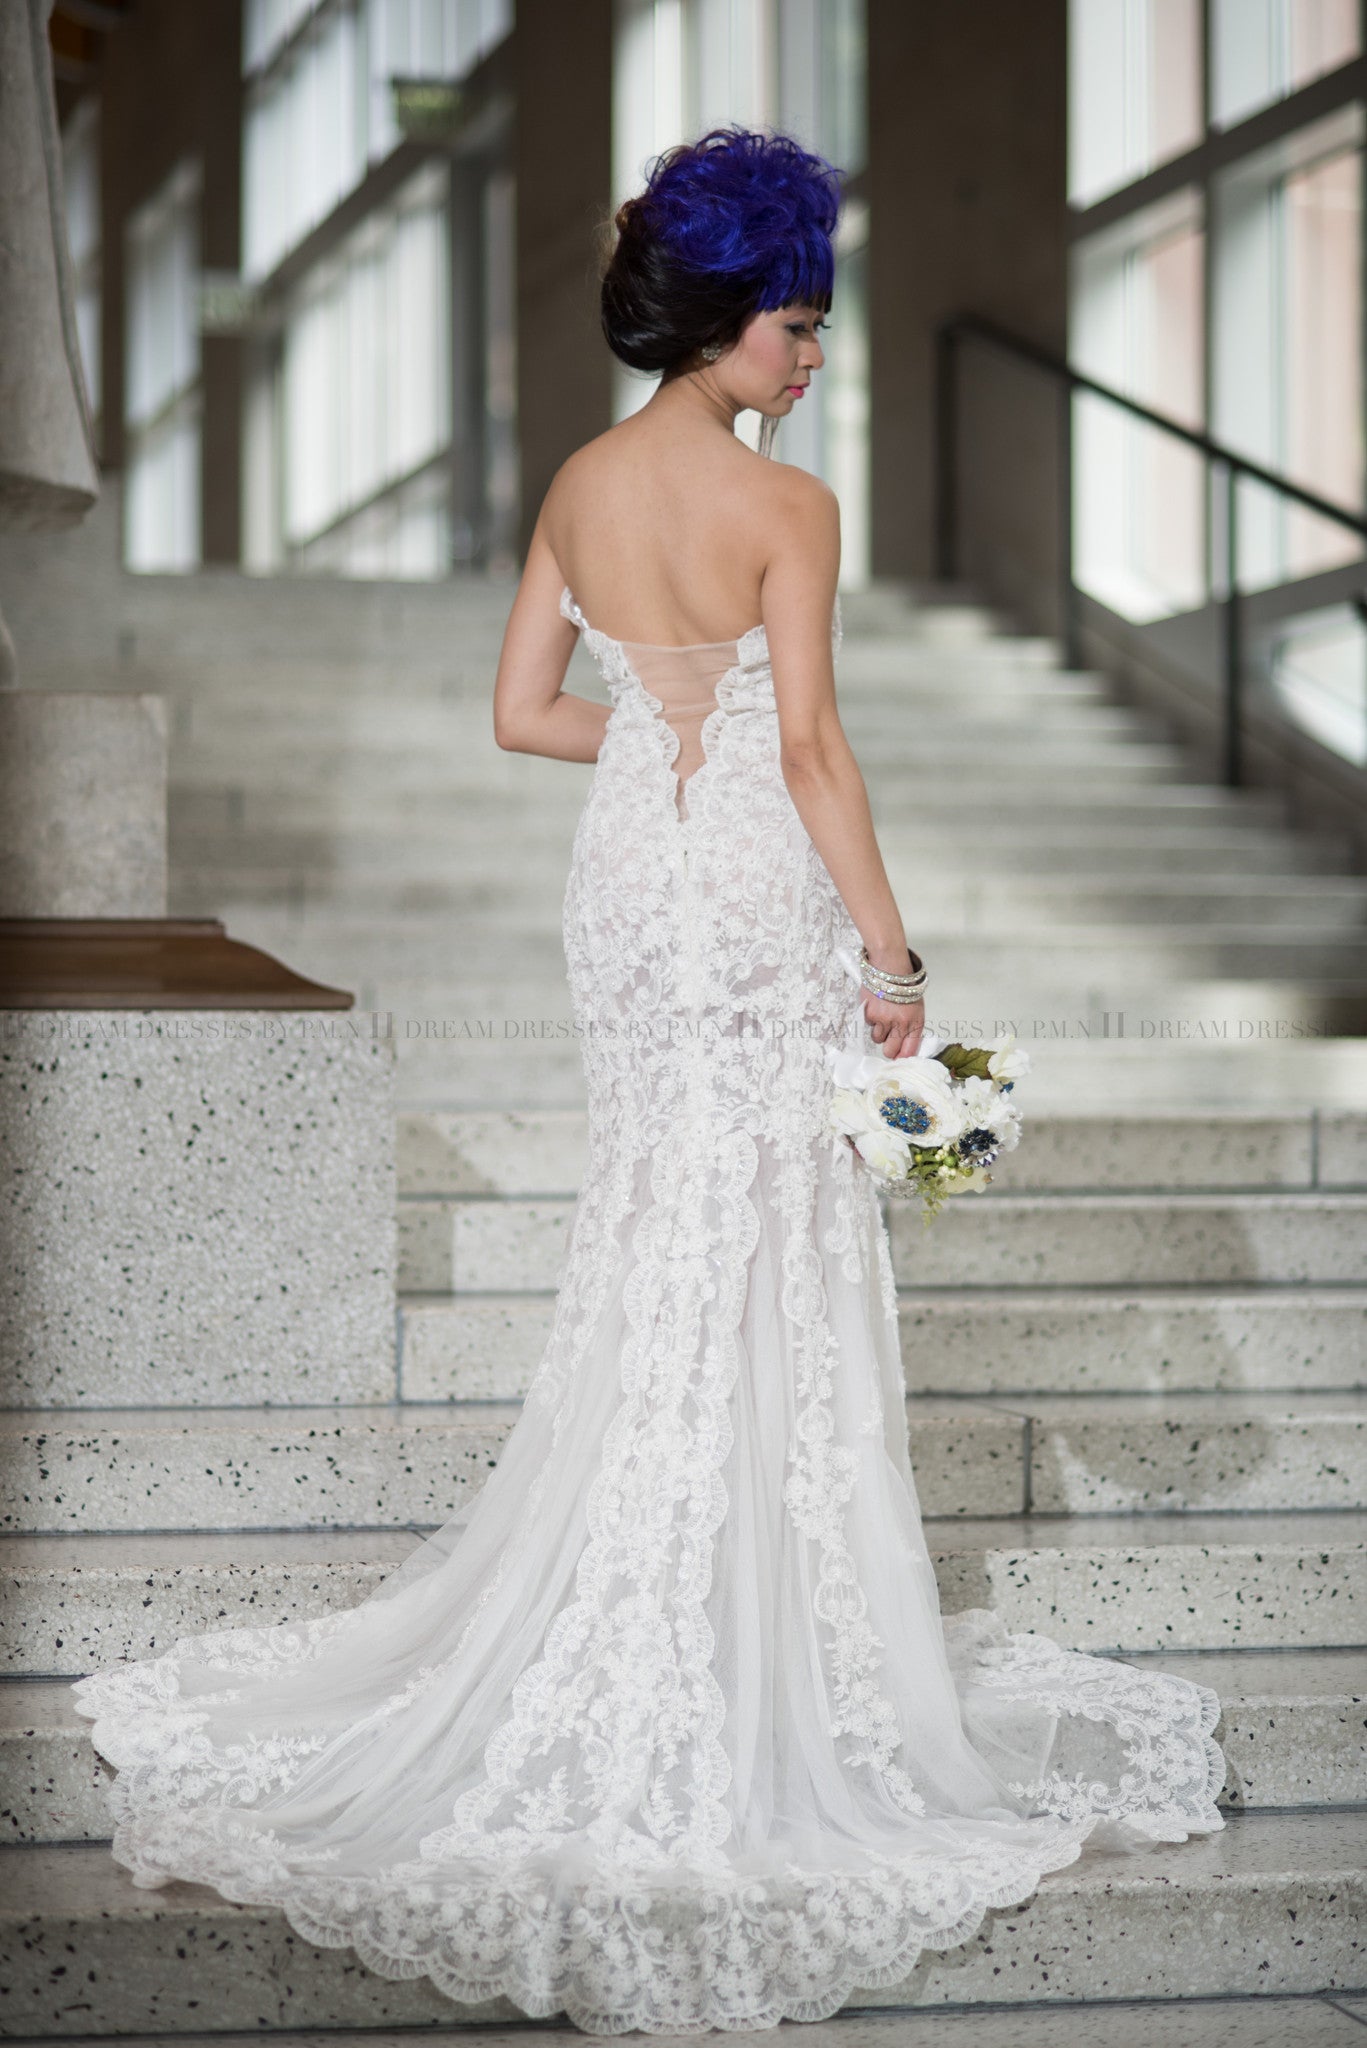 Lace Wedding Dress with High Slit (#Juliet)